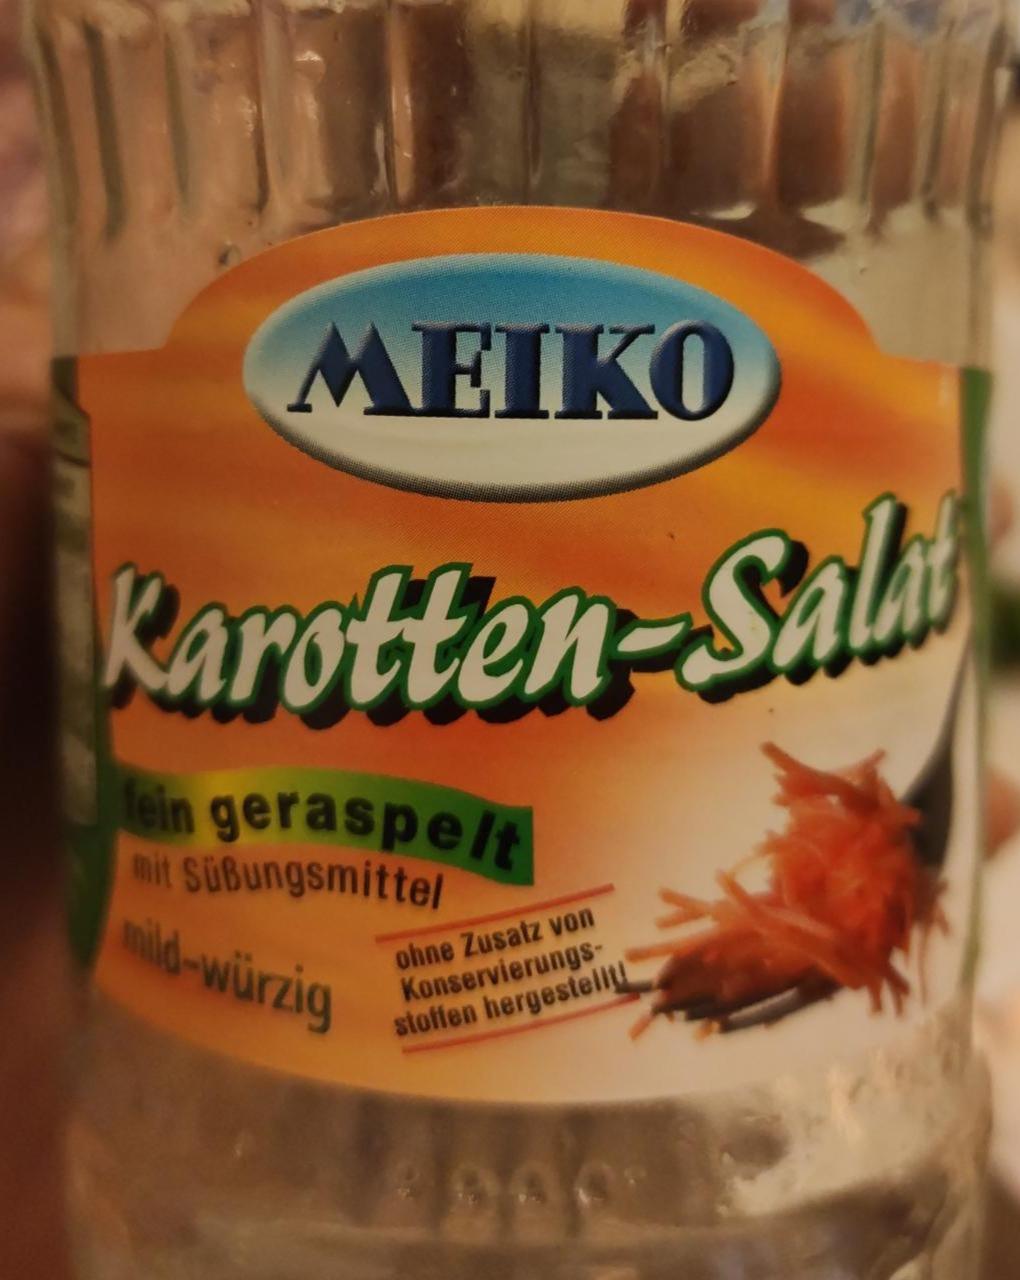 Fotografie - Karotten-Salat mild-würzig Meiko